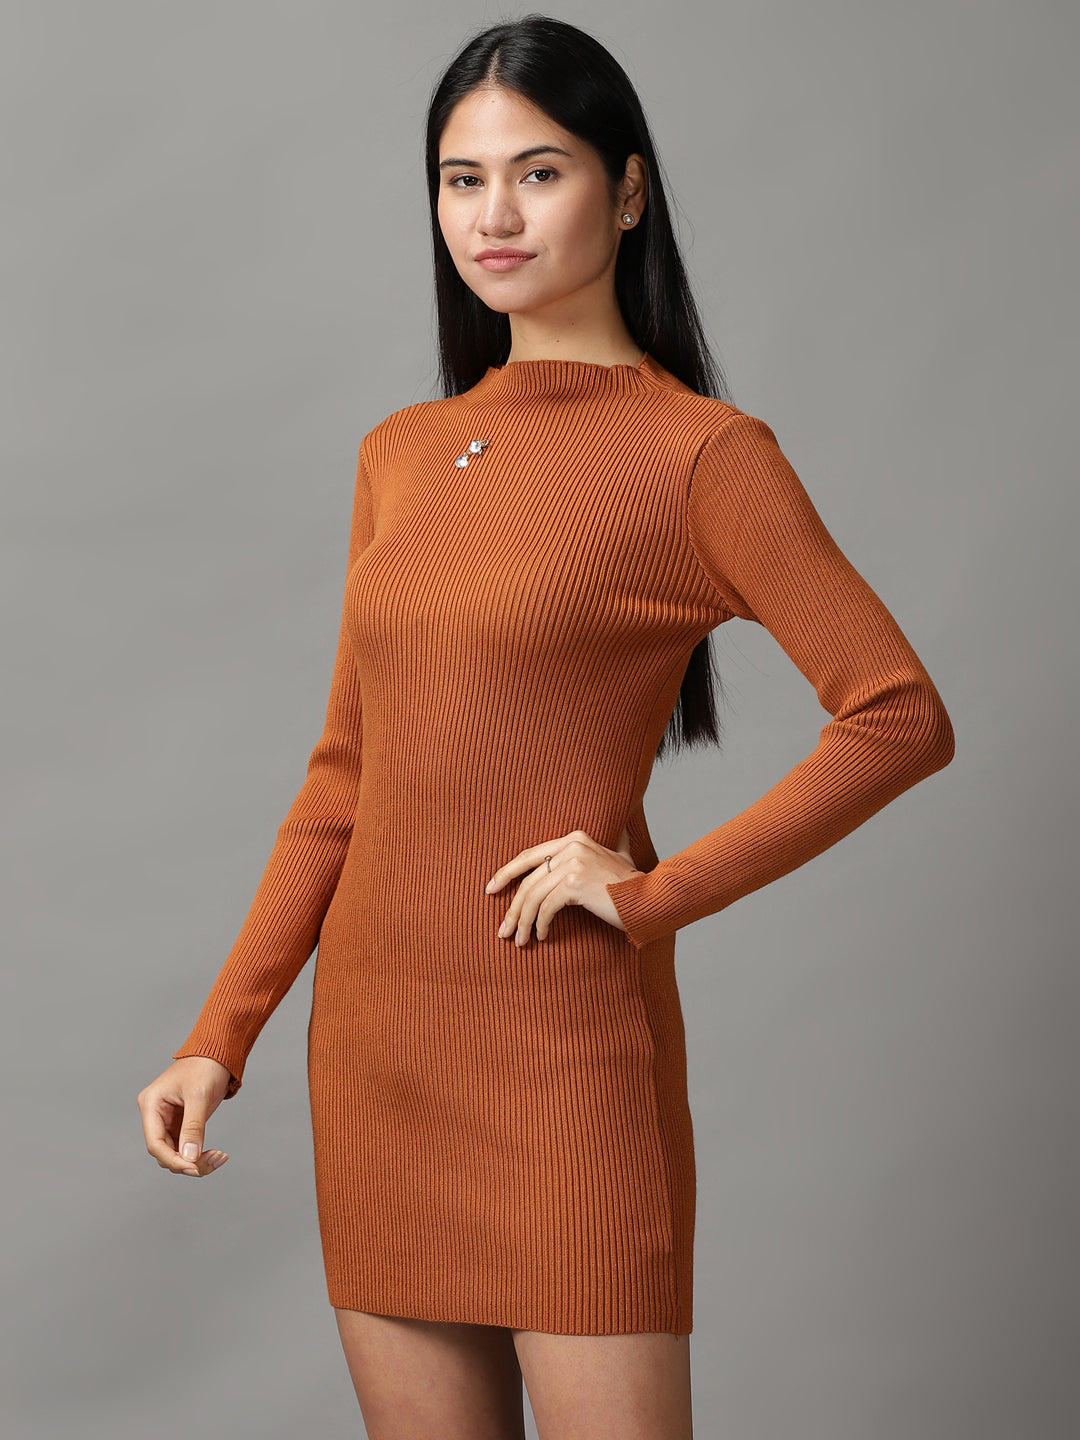 Women's Brown Solid Bodycon Dress